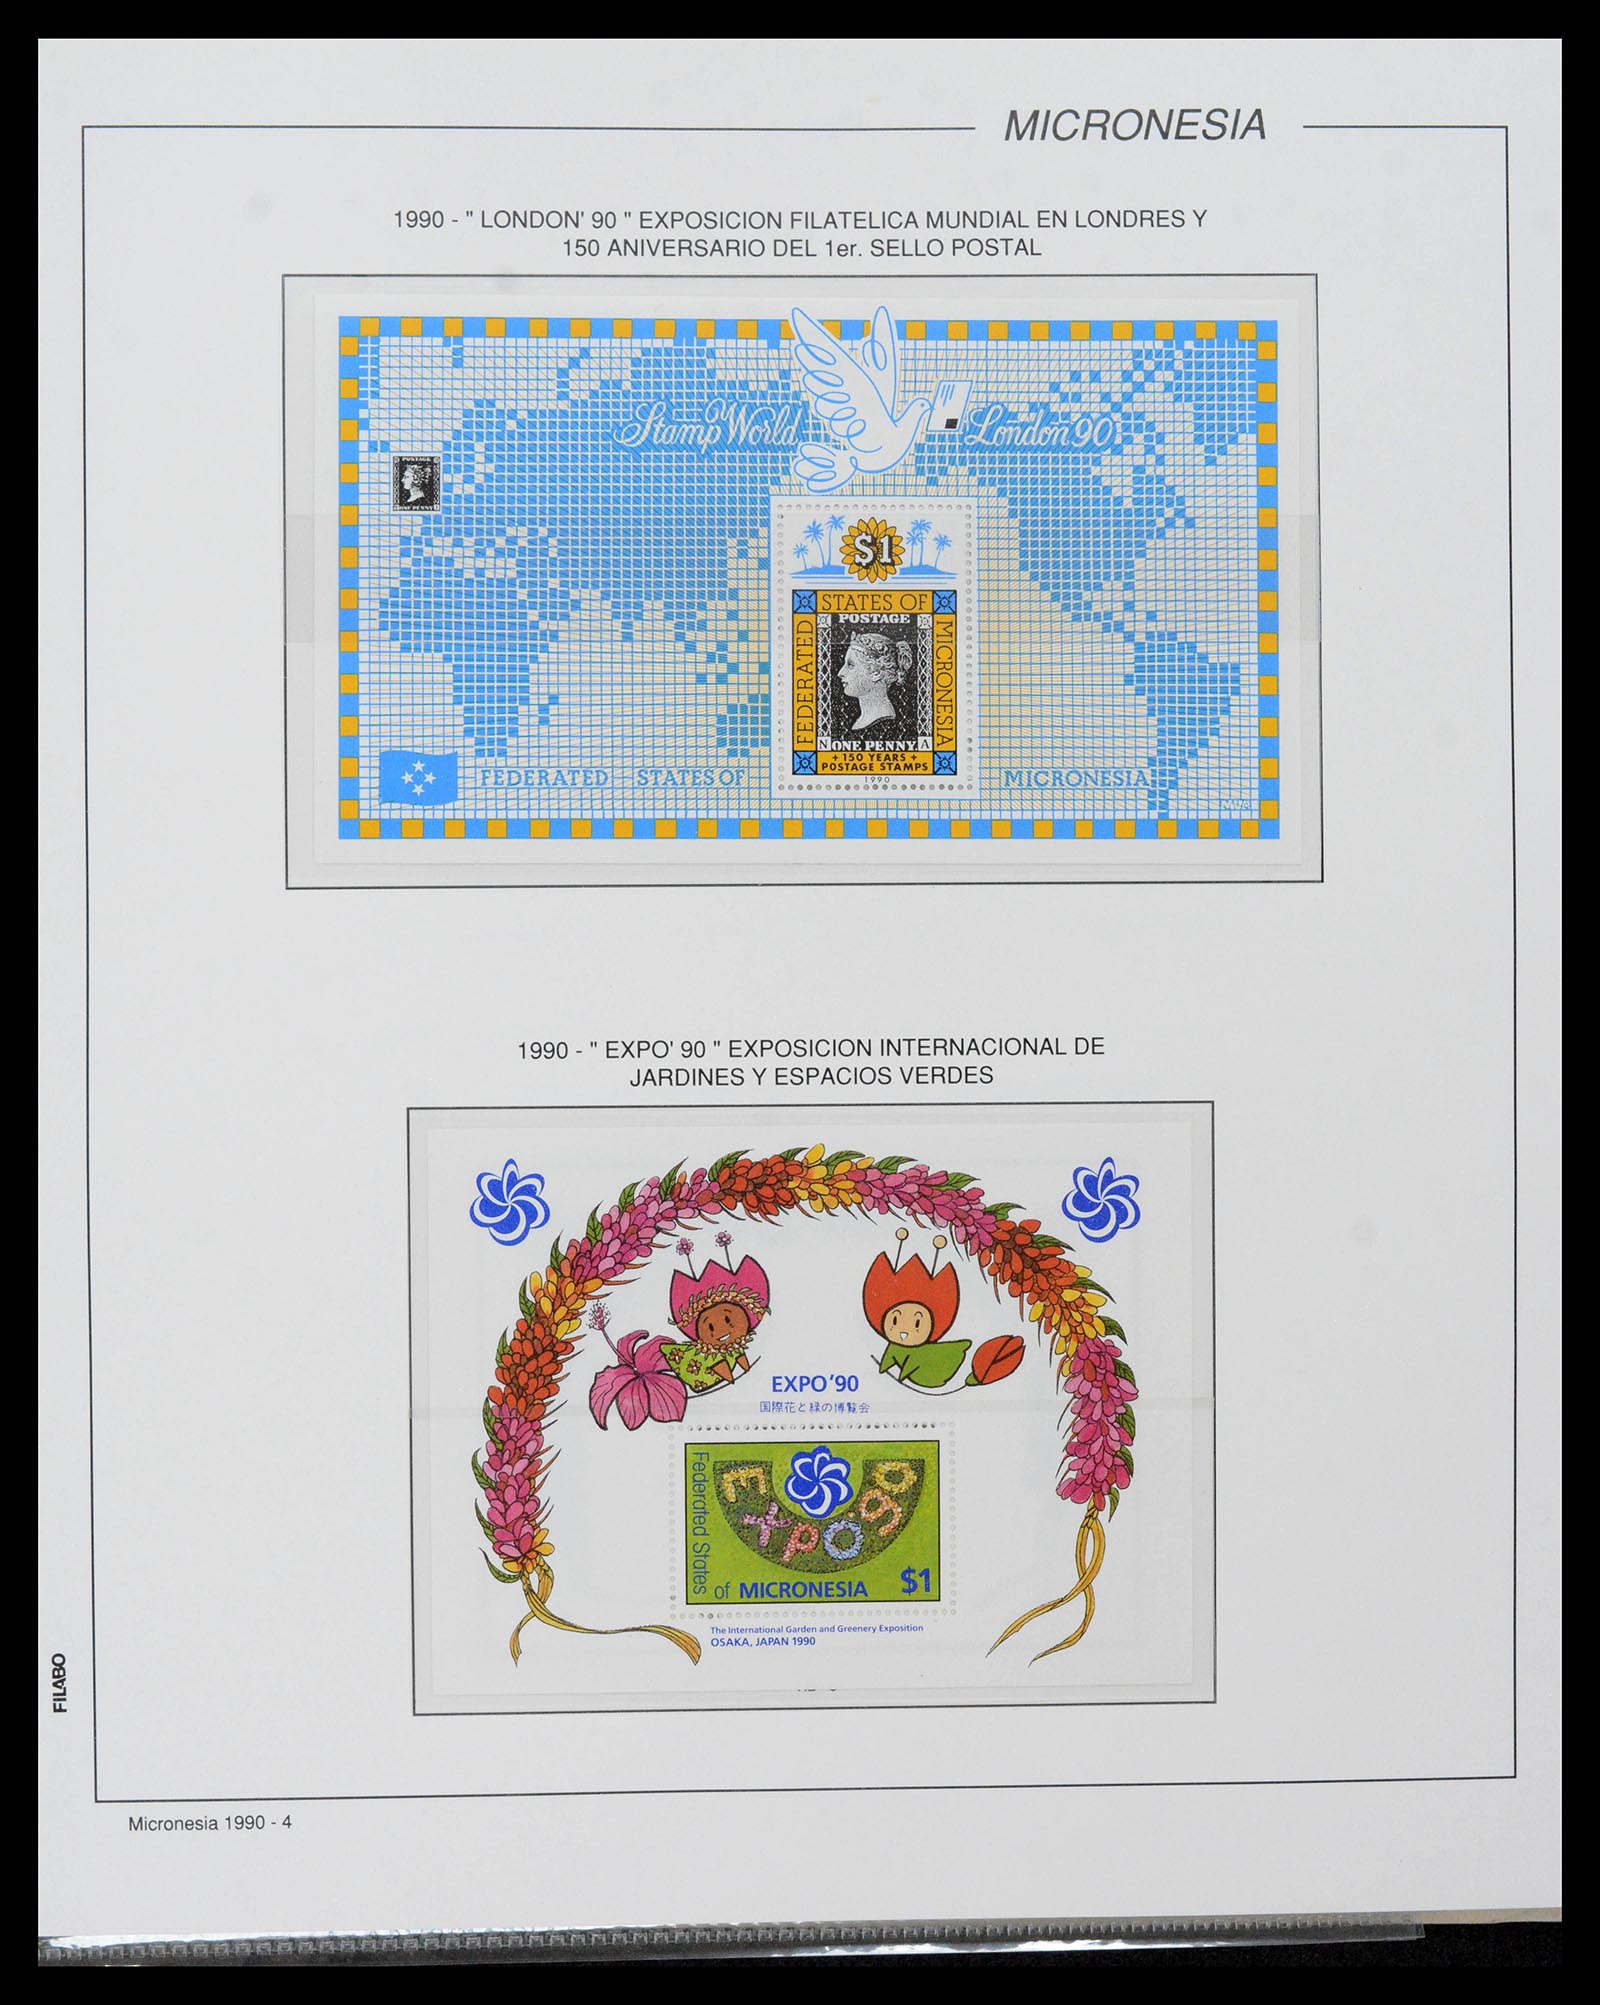 39222 0088 - Stamp collection 39222 Palau, Micronesia and Marshall islands 1980-1995.